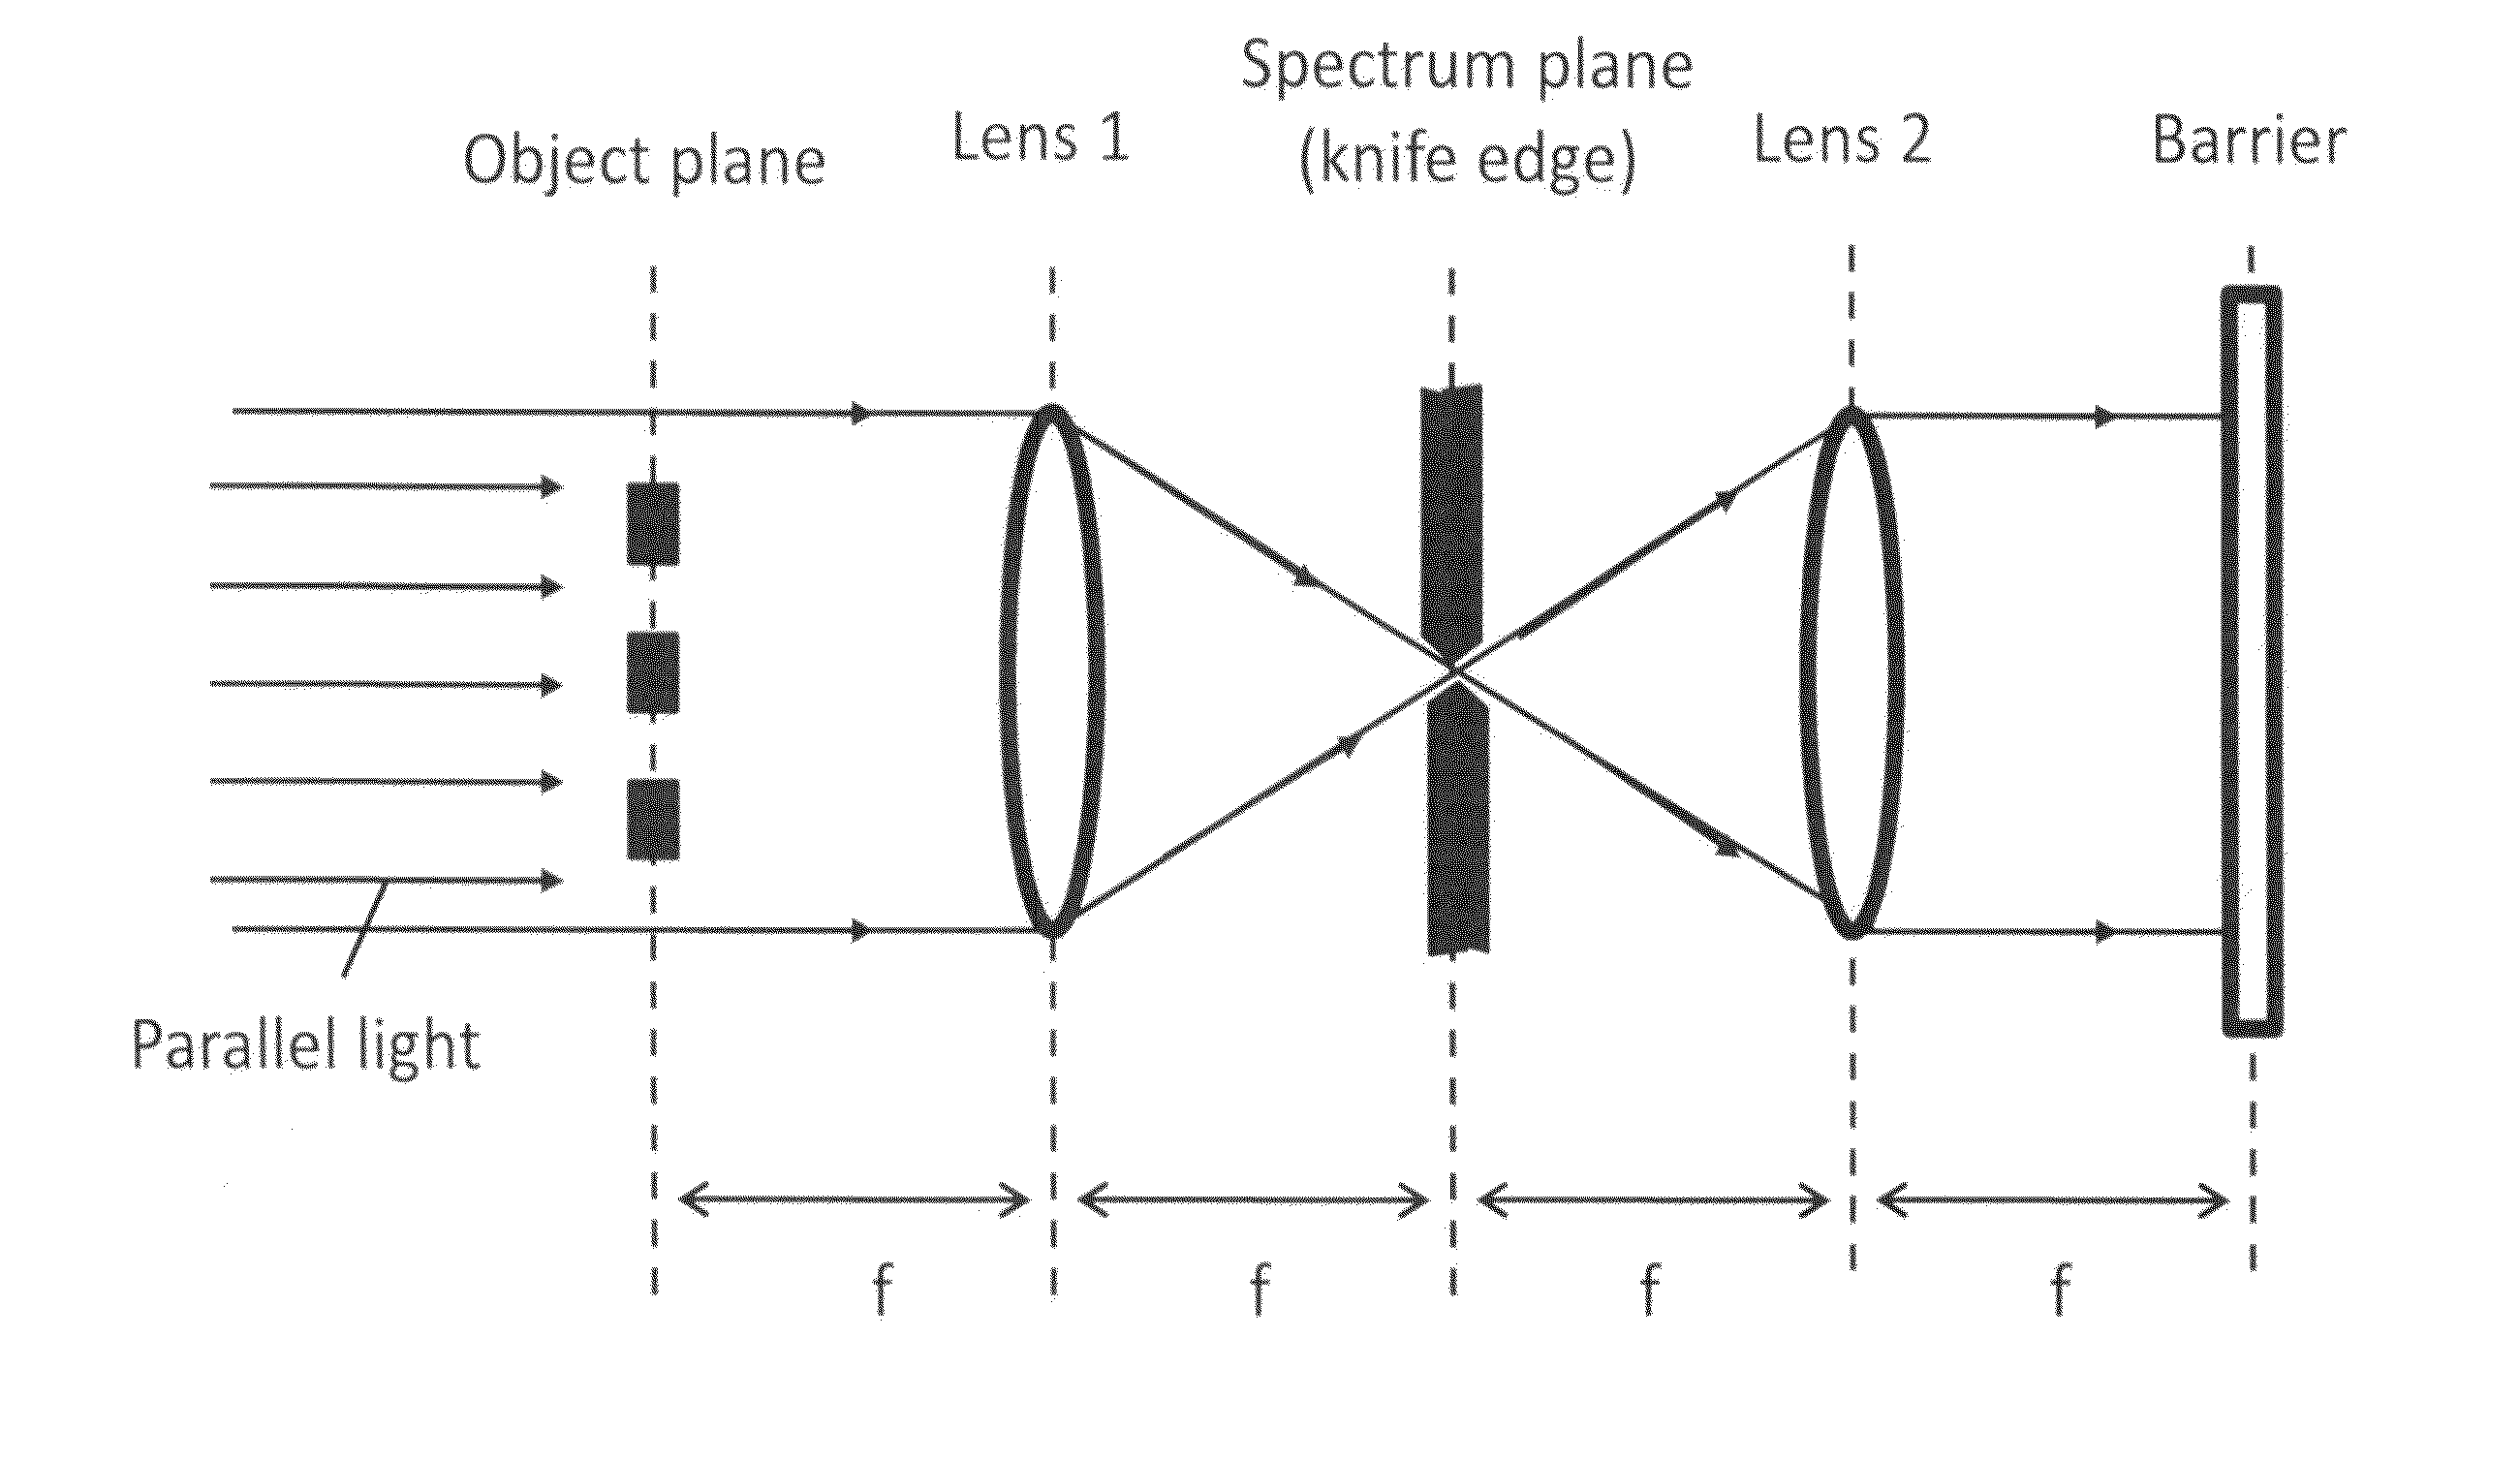 Schlieren type ultrasonic wave observer system